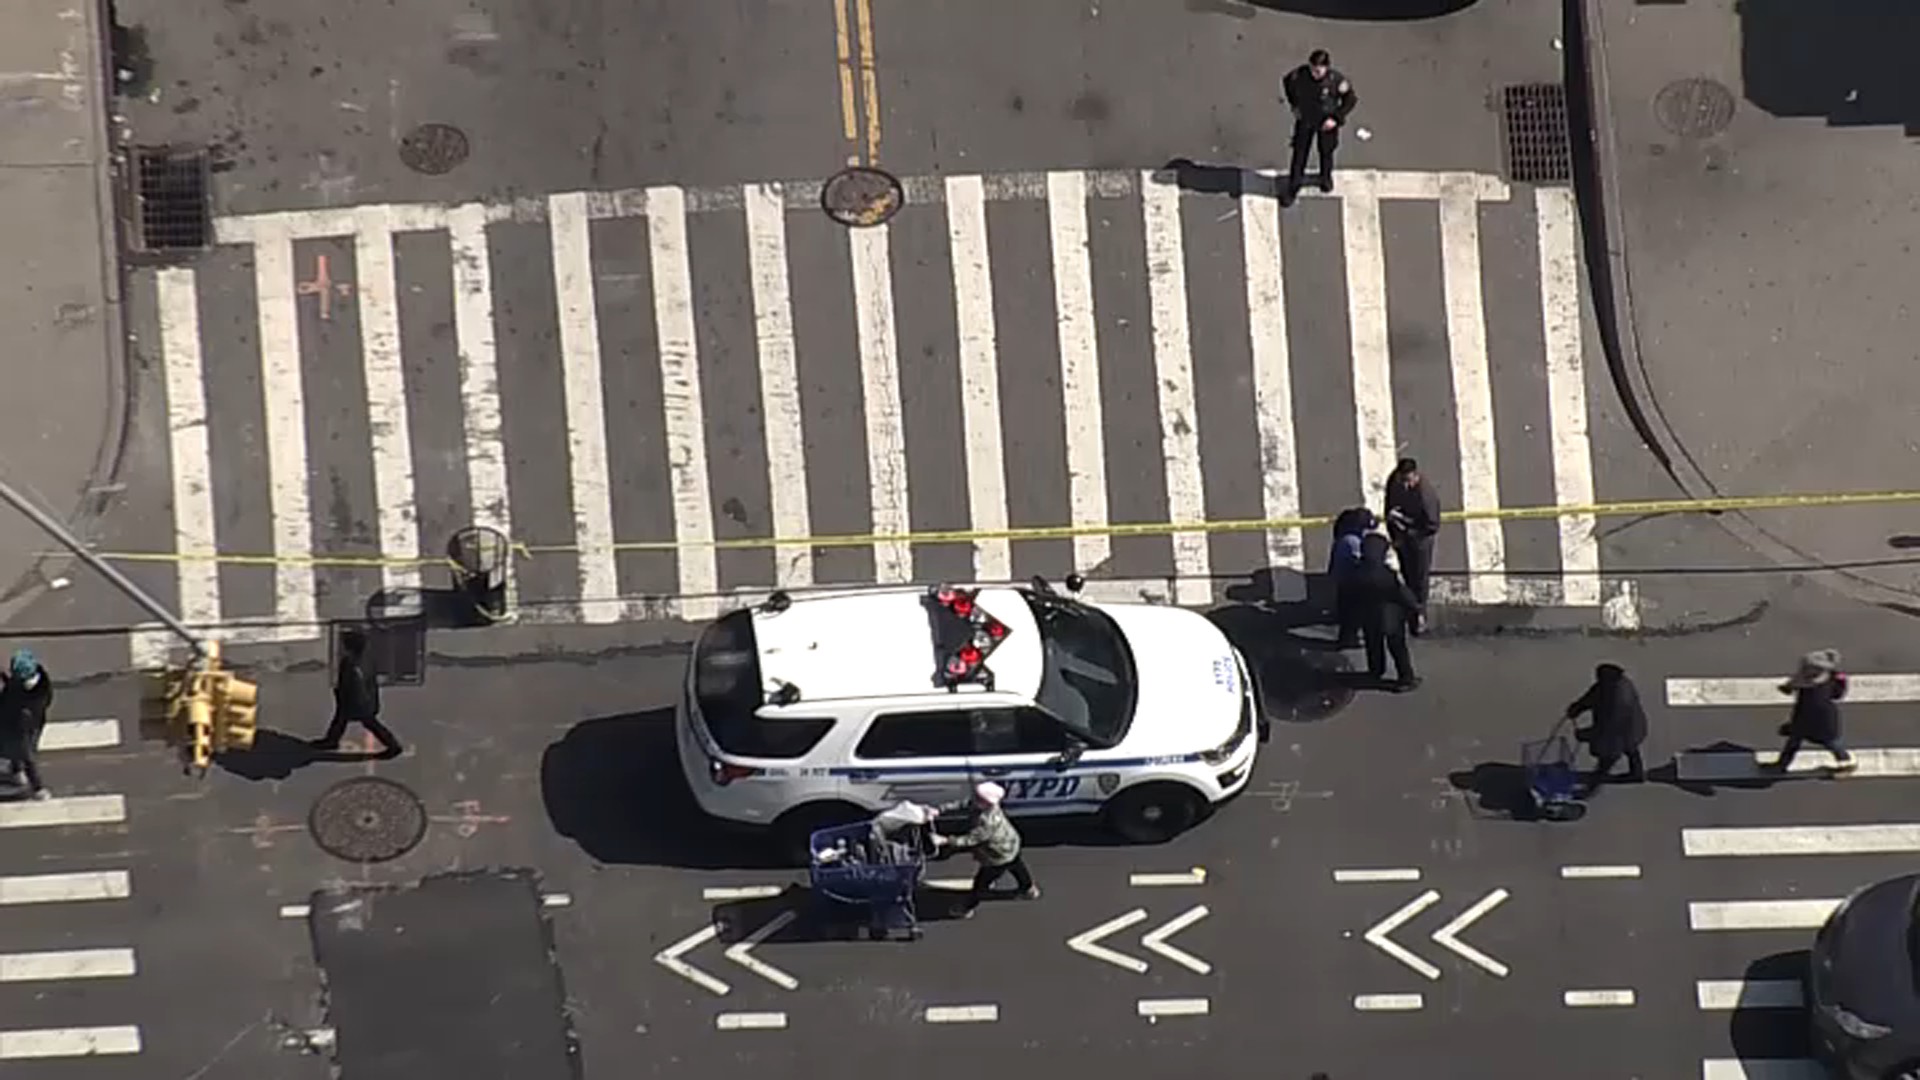 Man Fatally Shot Sitting in Car in Broad Daylight: Police